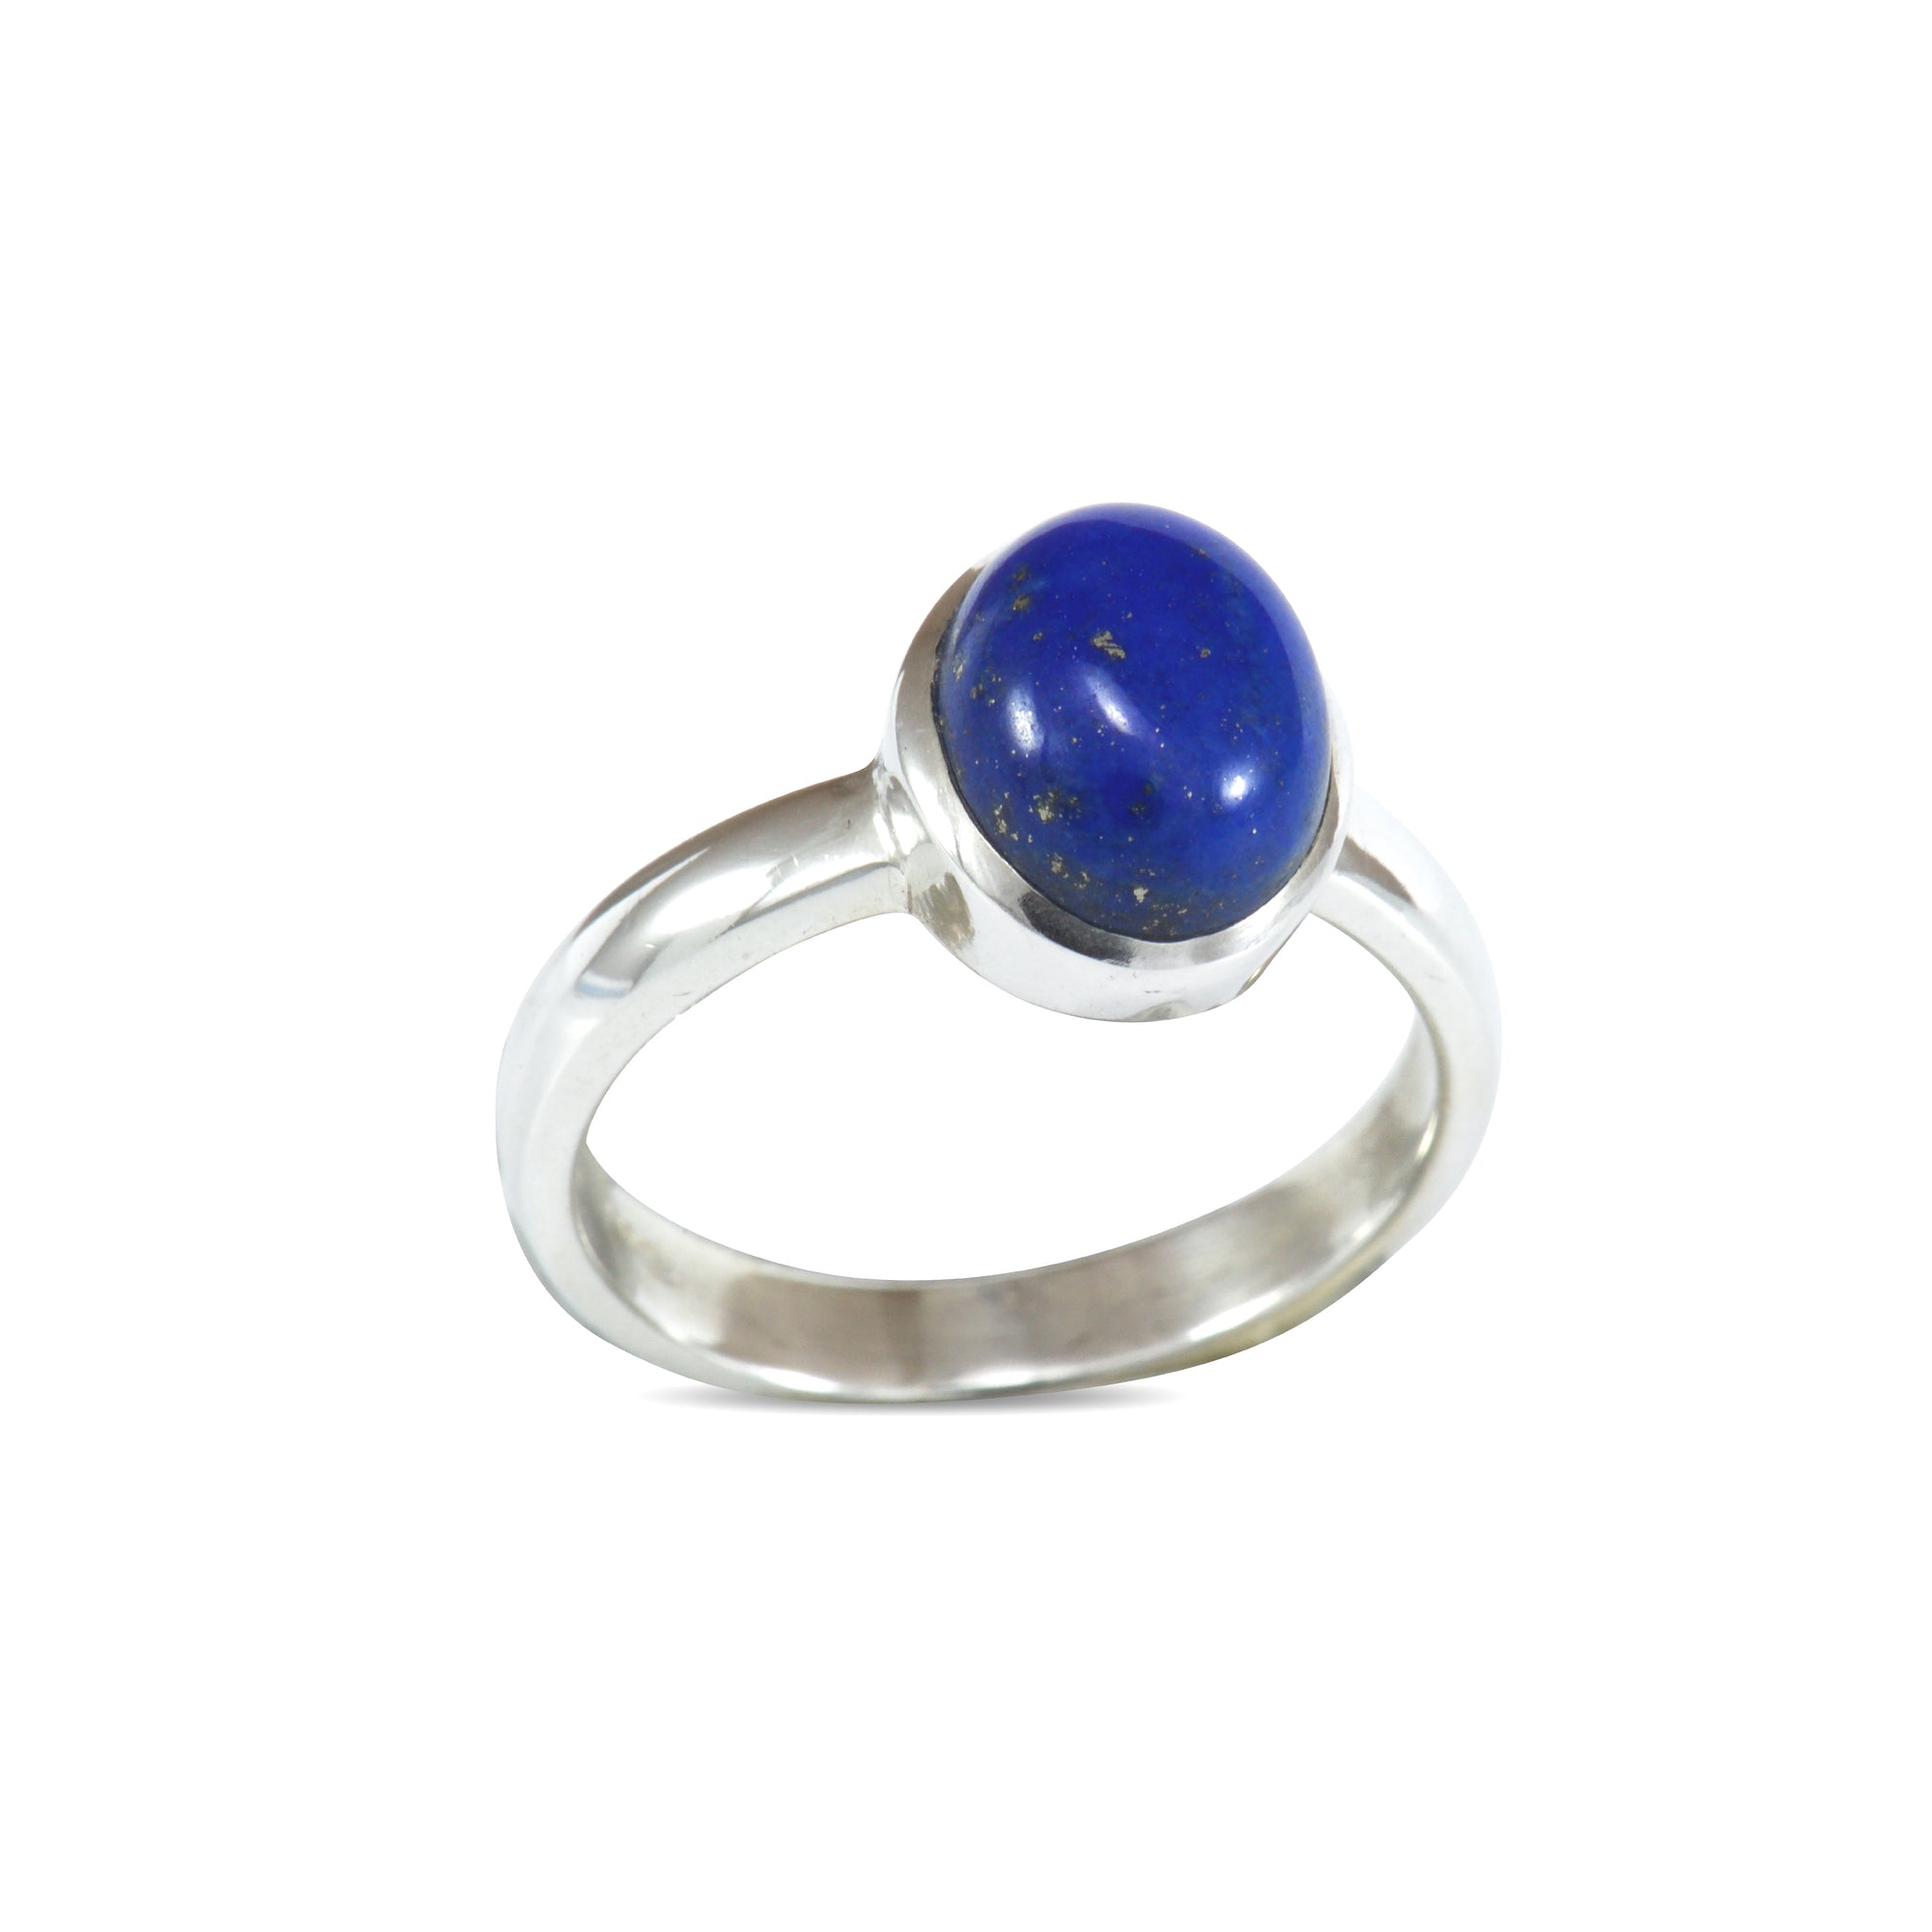 Small Lapis lazuli ring